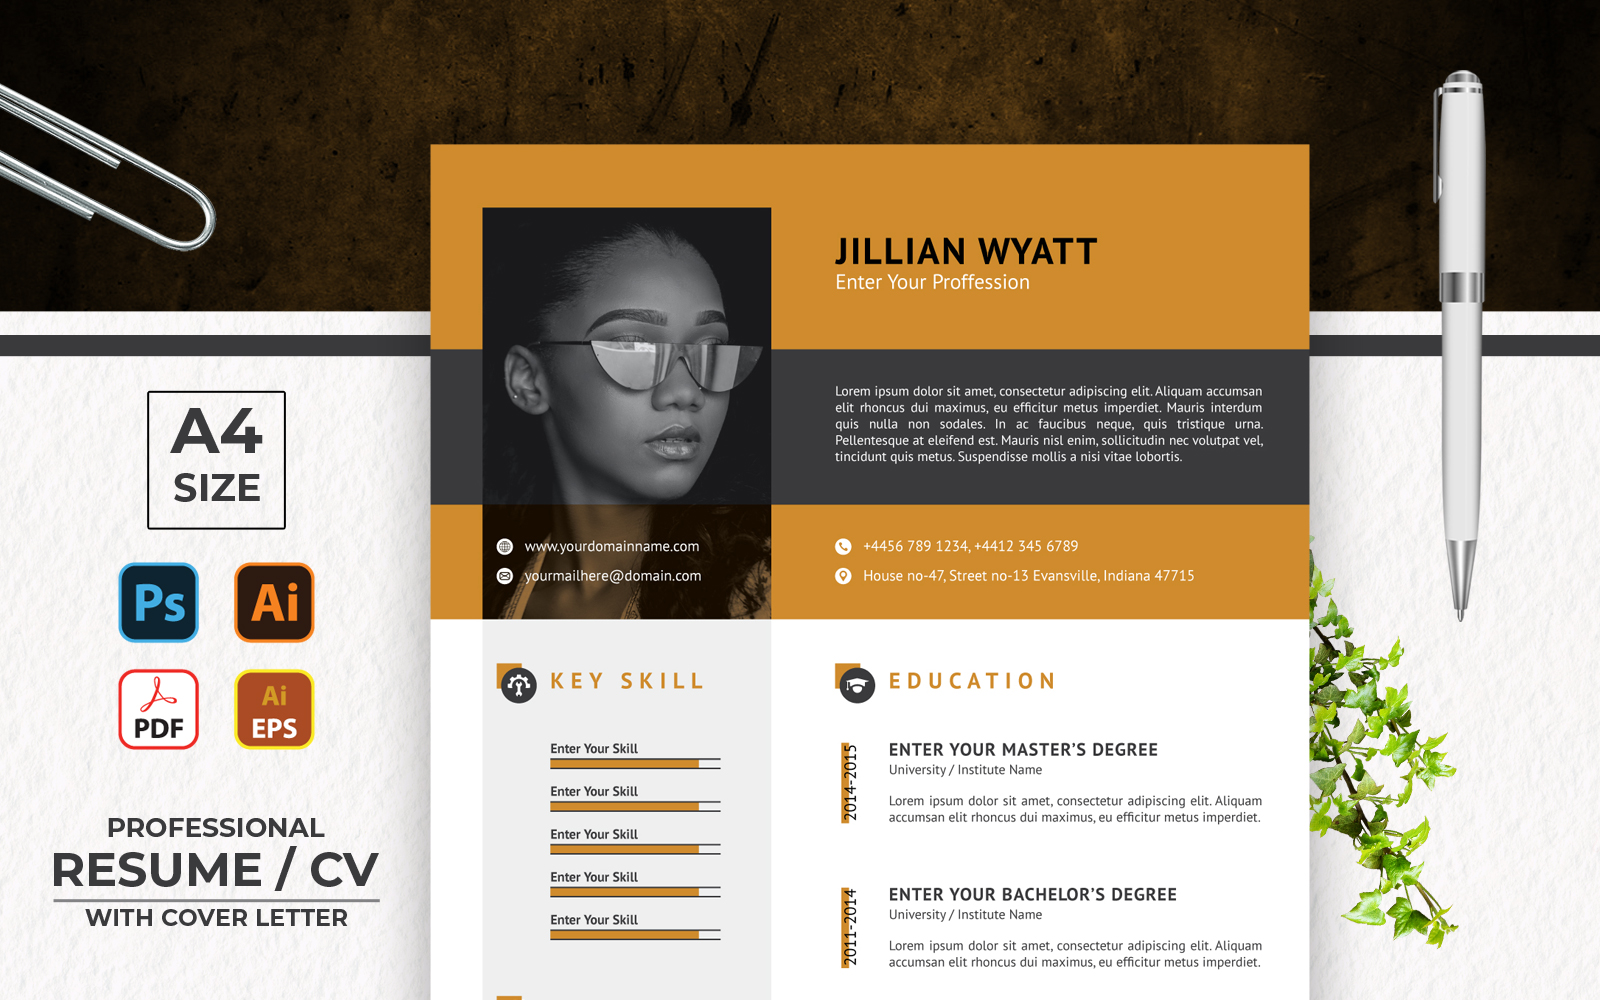 Jillian Wyatt Printable Resume/CV Template